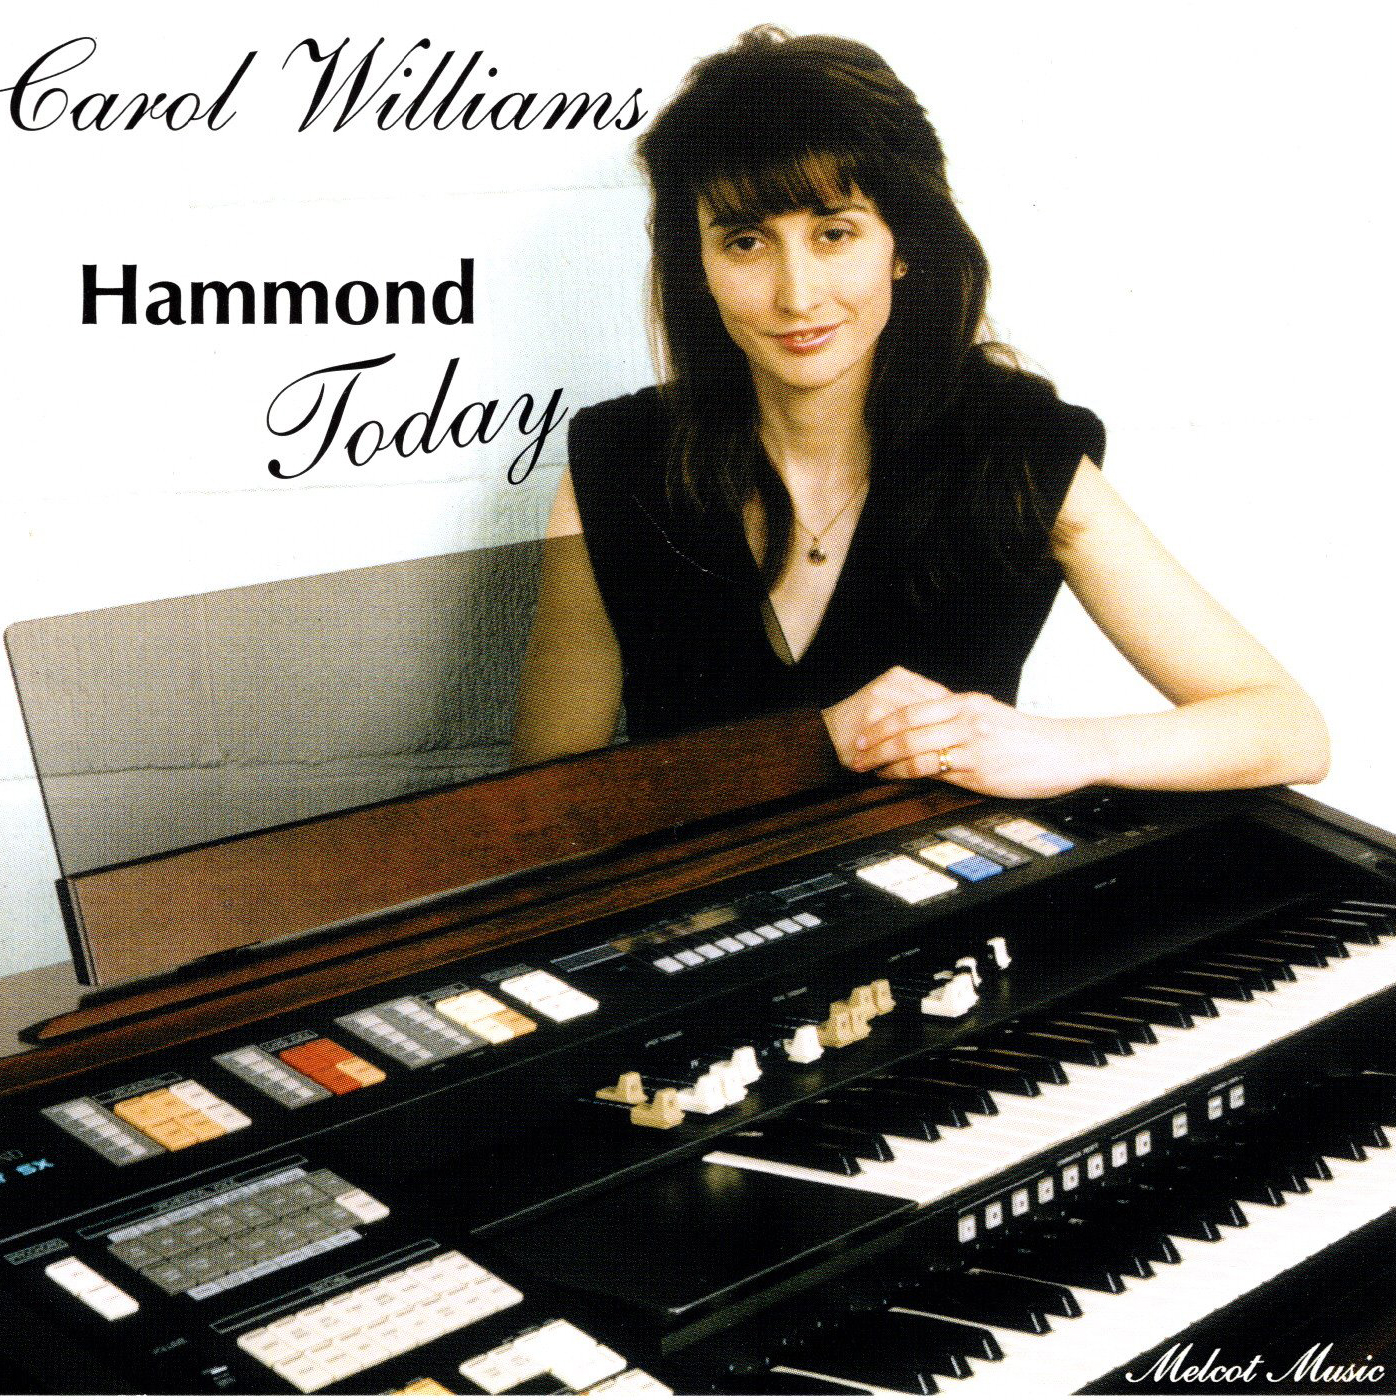 Carol Williams on Hammond